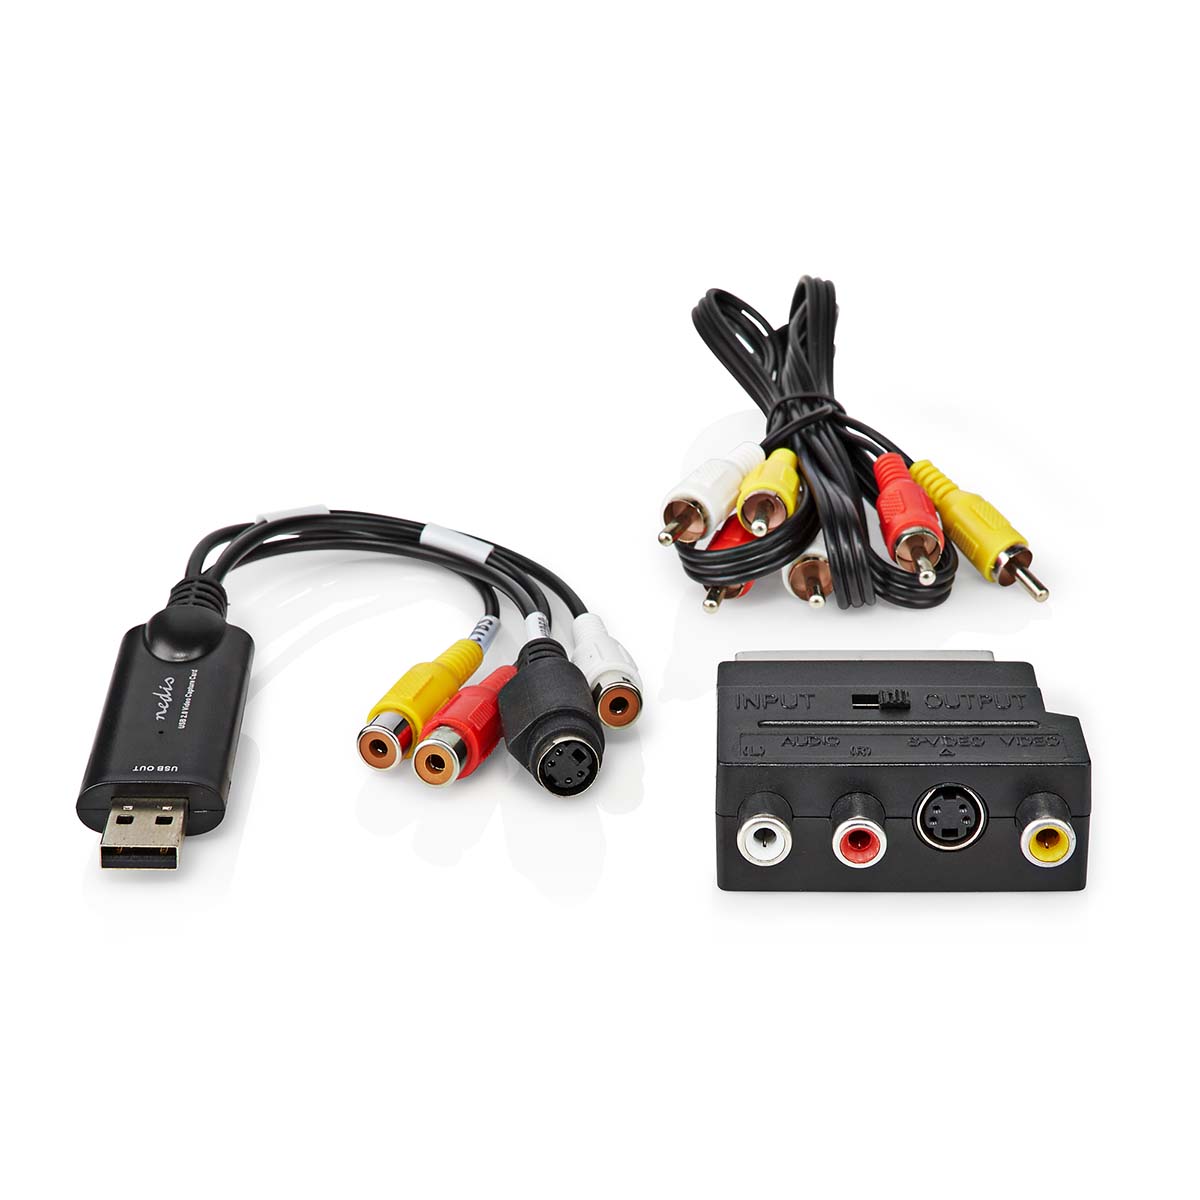 Aanbevolen Redenaar oud Video Grabber | USB 2.0 | 480p | A/V Cable / Scart